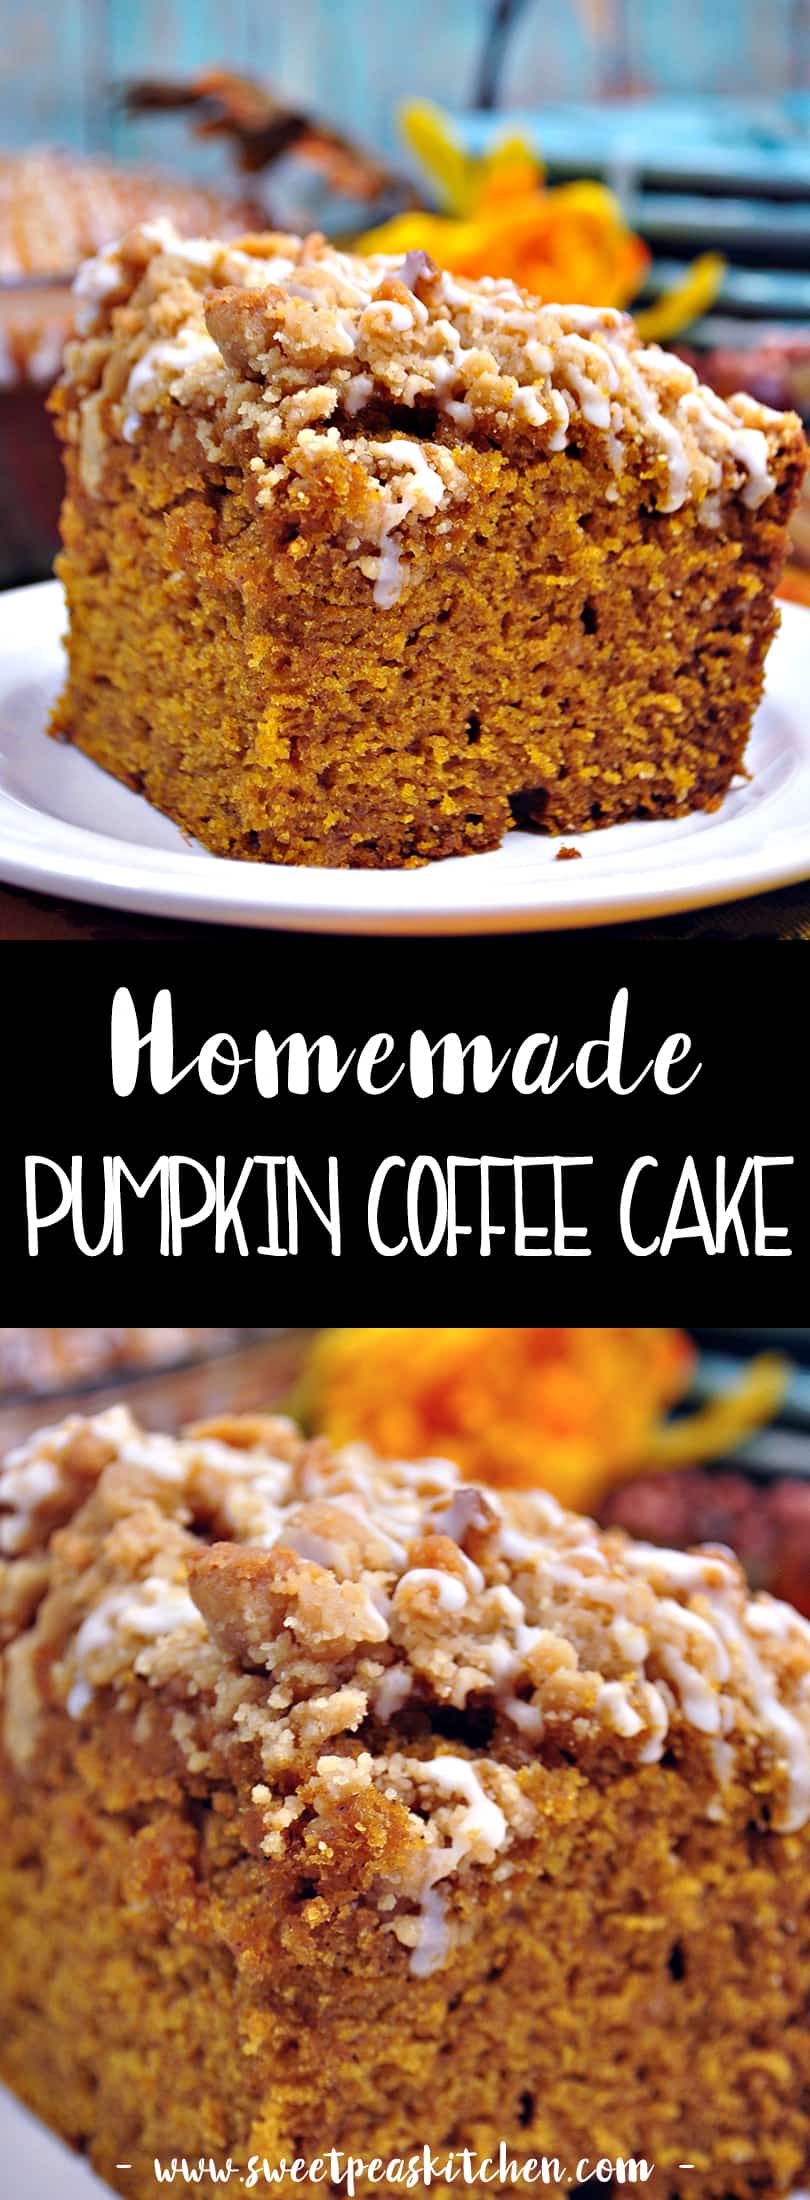 Homemade Pumpkin Coffee Cake with Crumb Topping